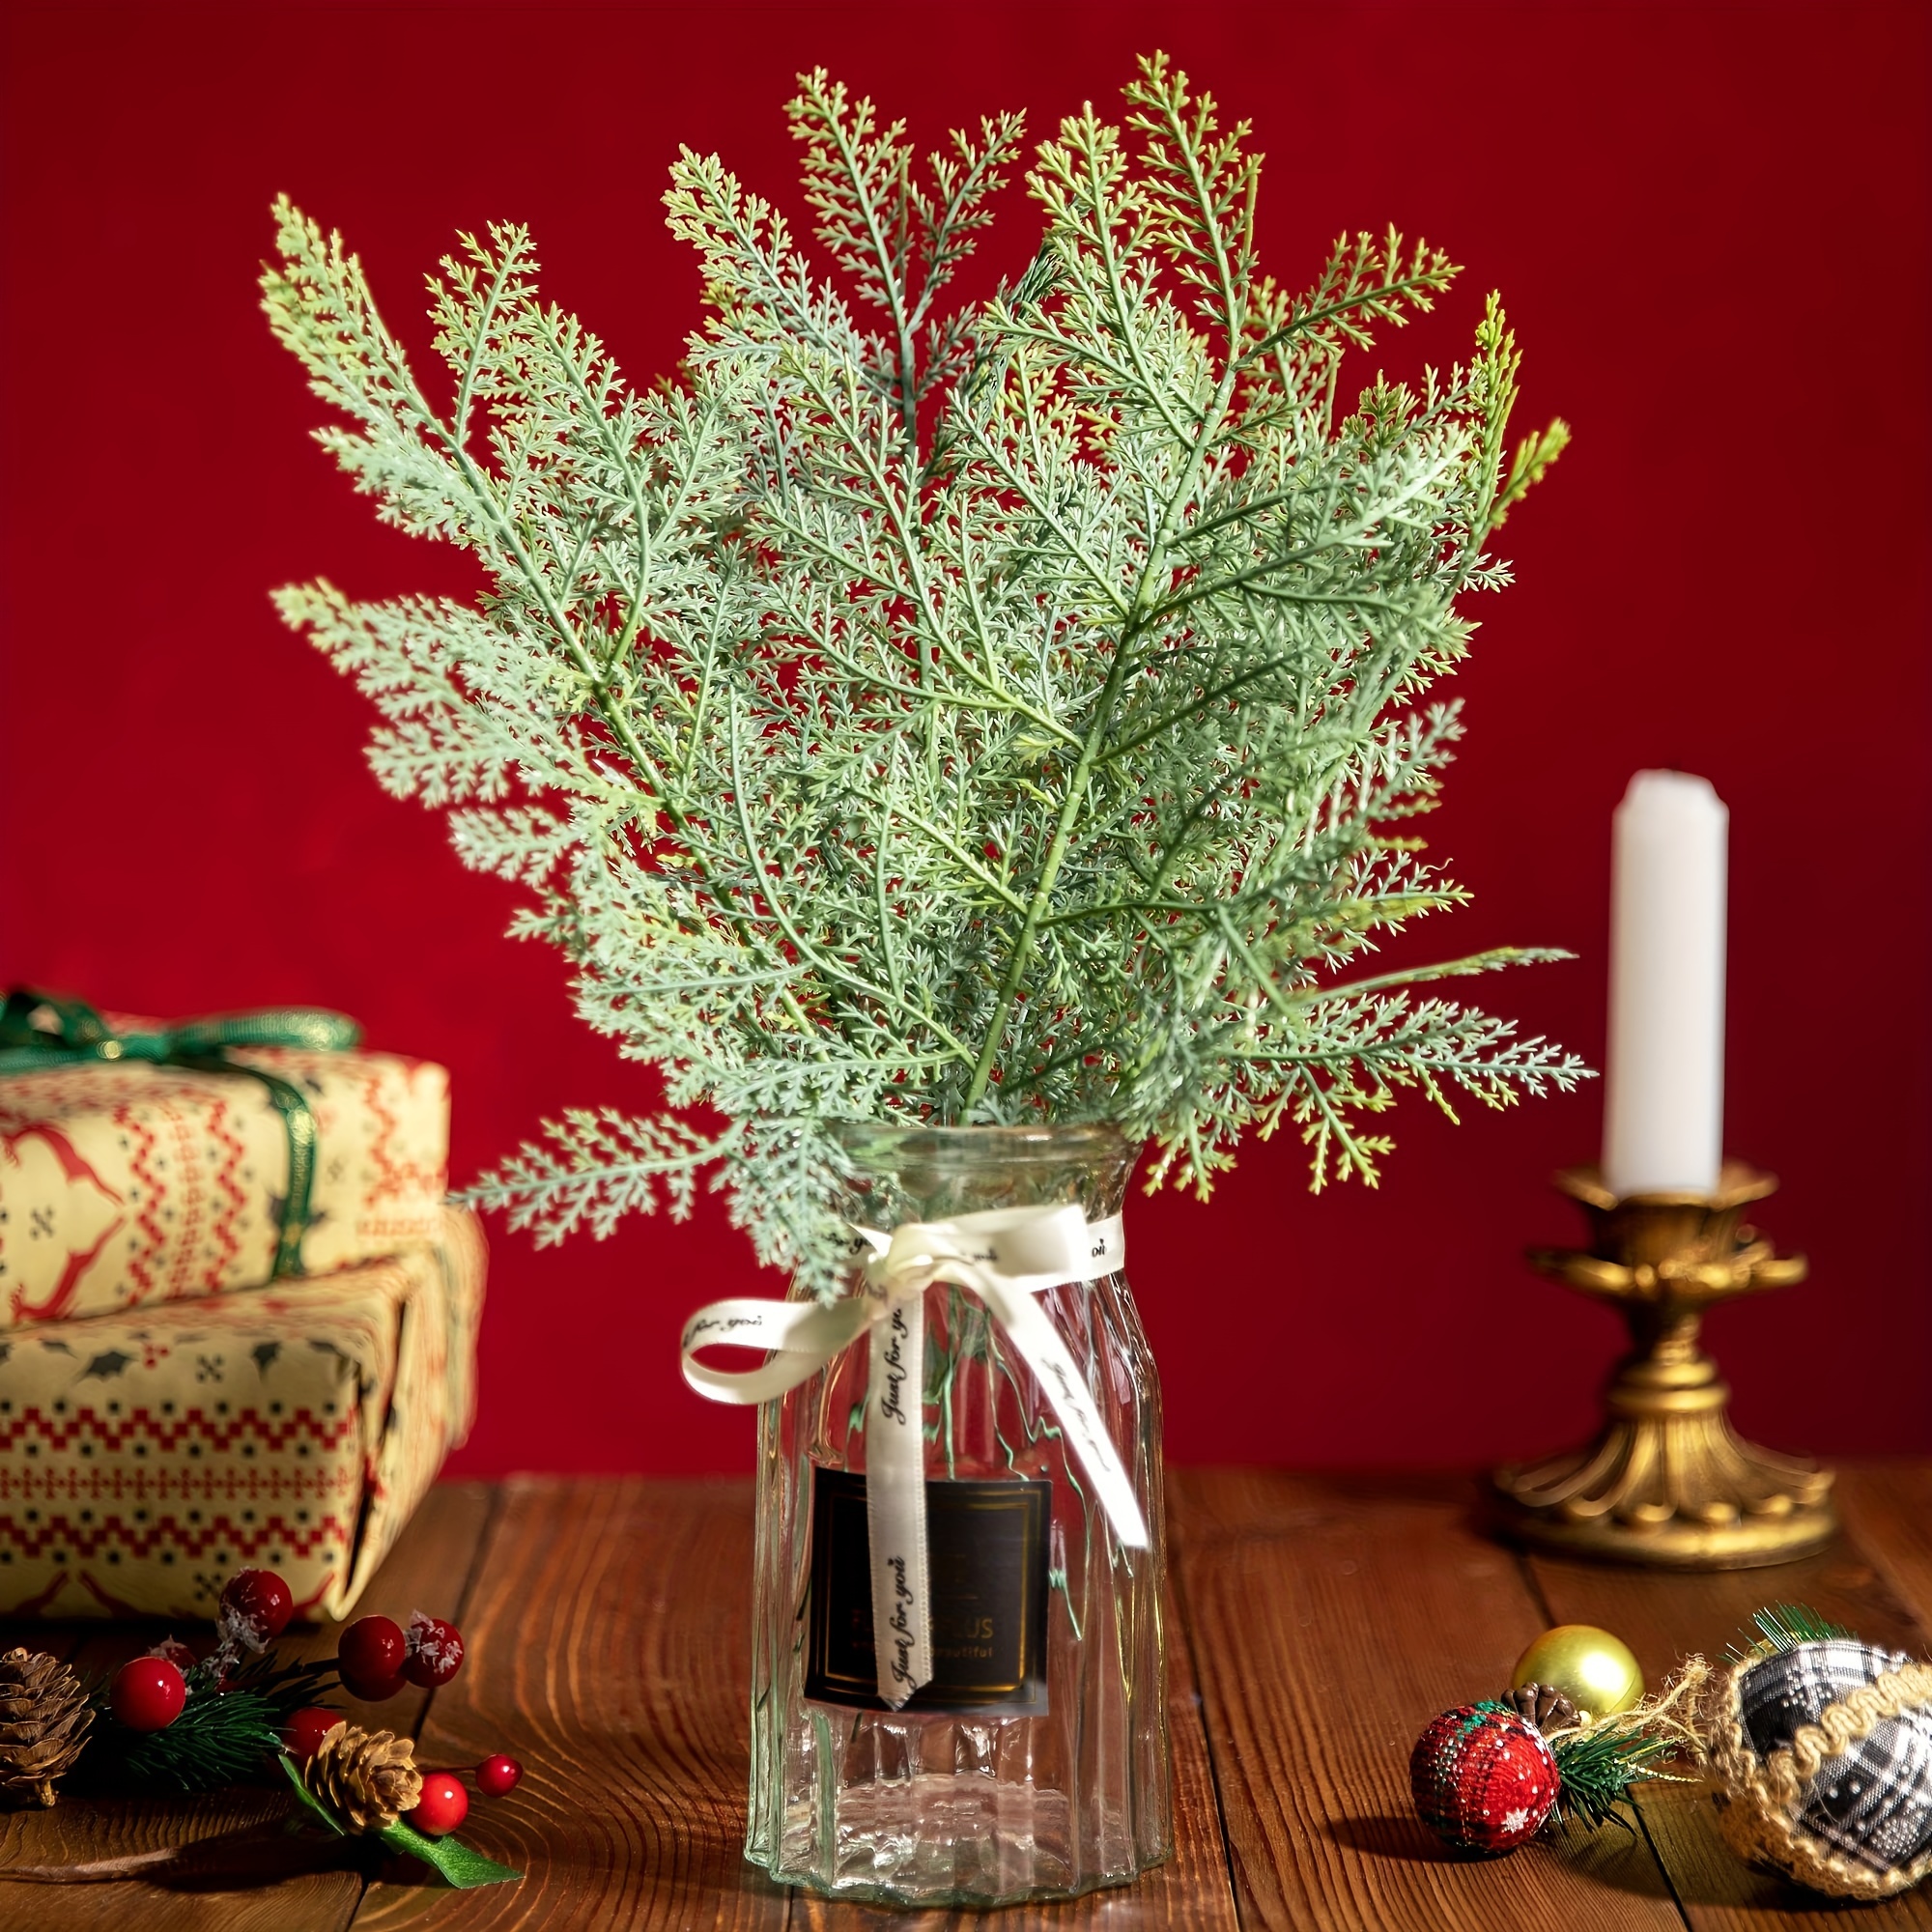 30 Artificial Cedar Spray/stem-winter Greenery-faux Christmas